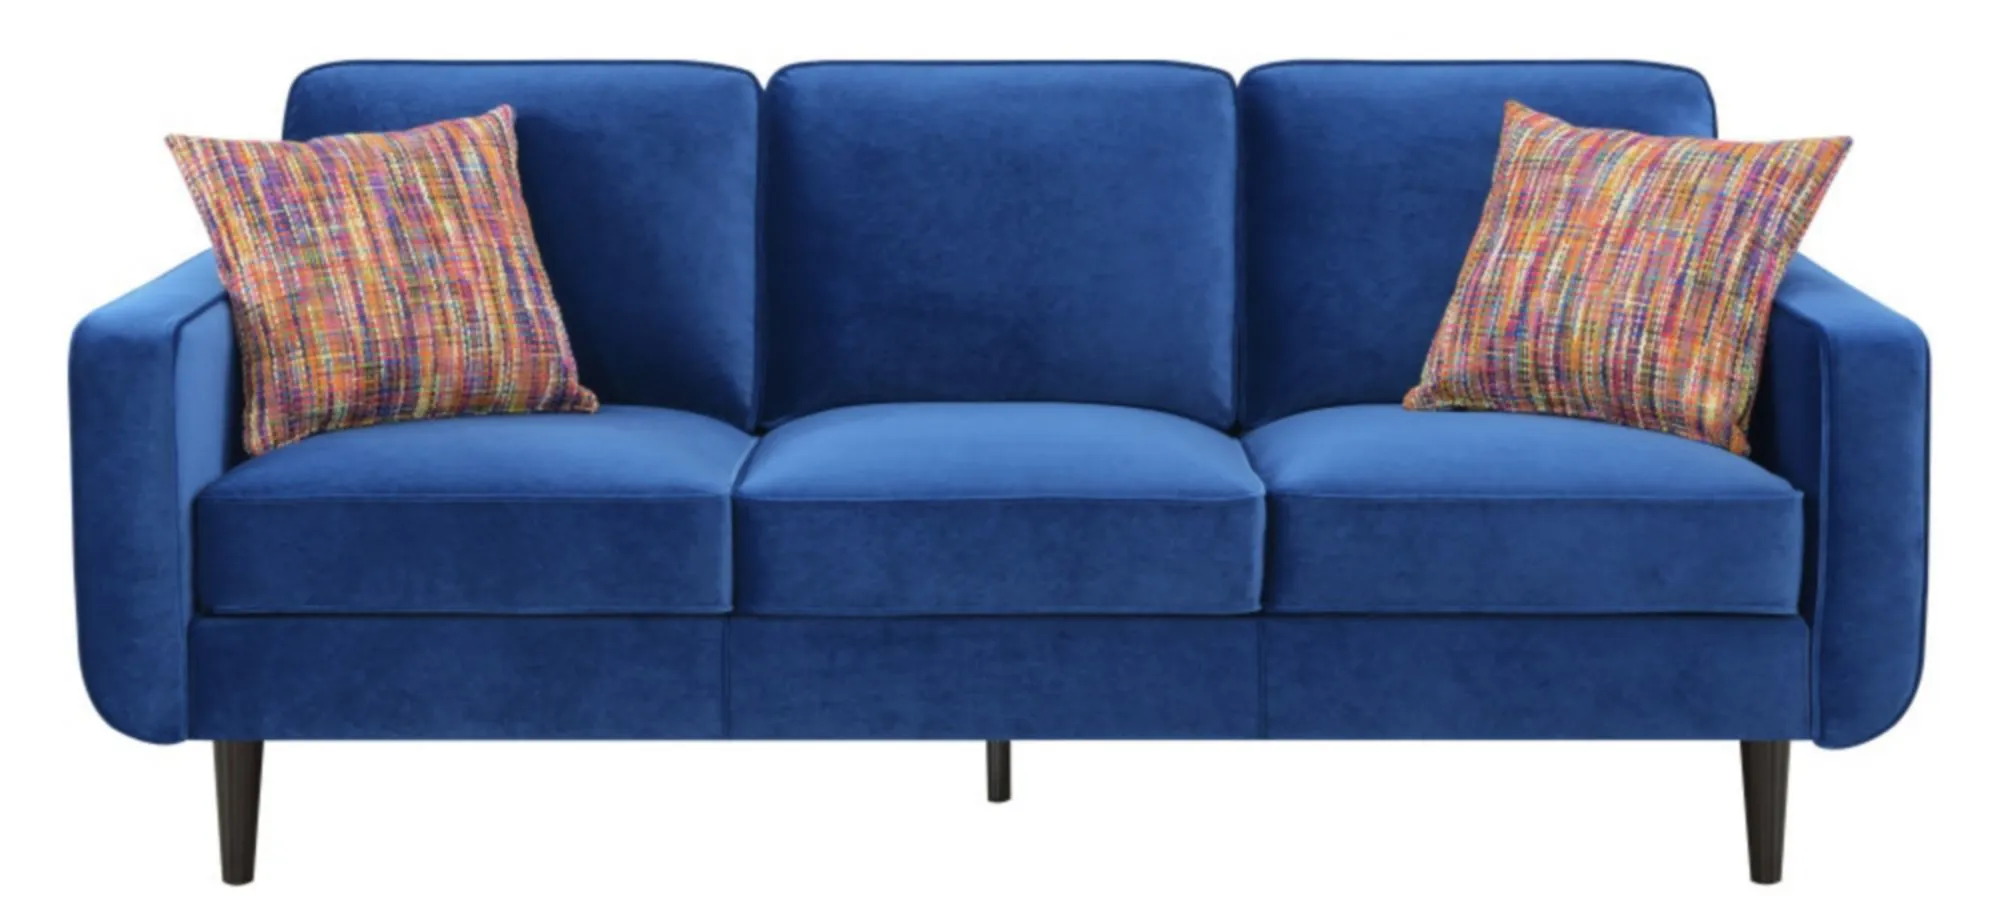 Jax Sofa in royal blue by Emerald Home Furnishings